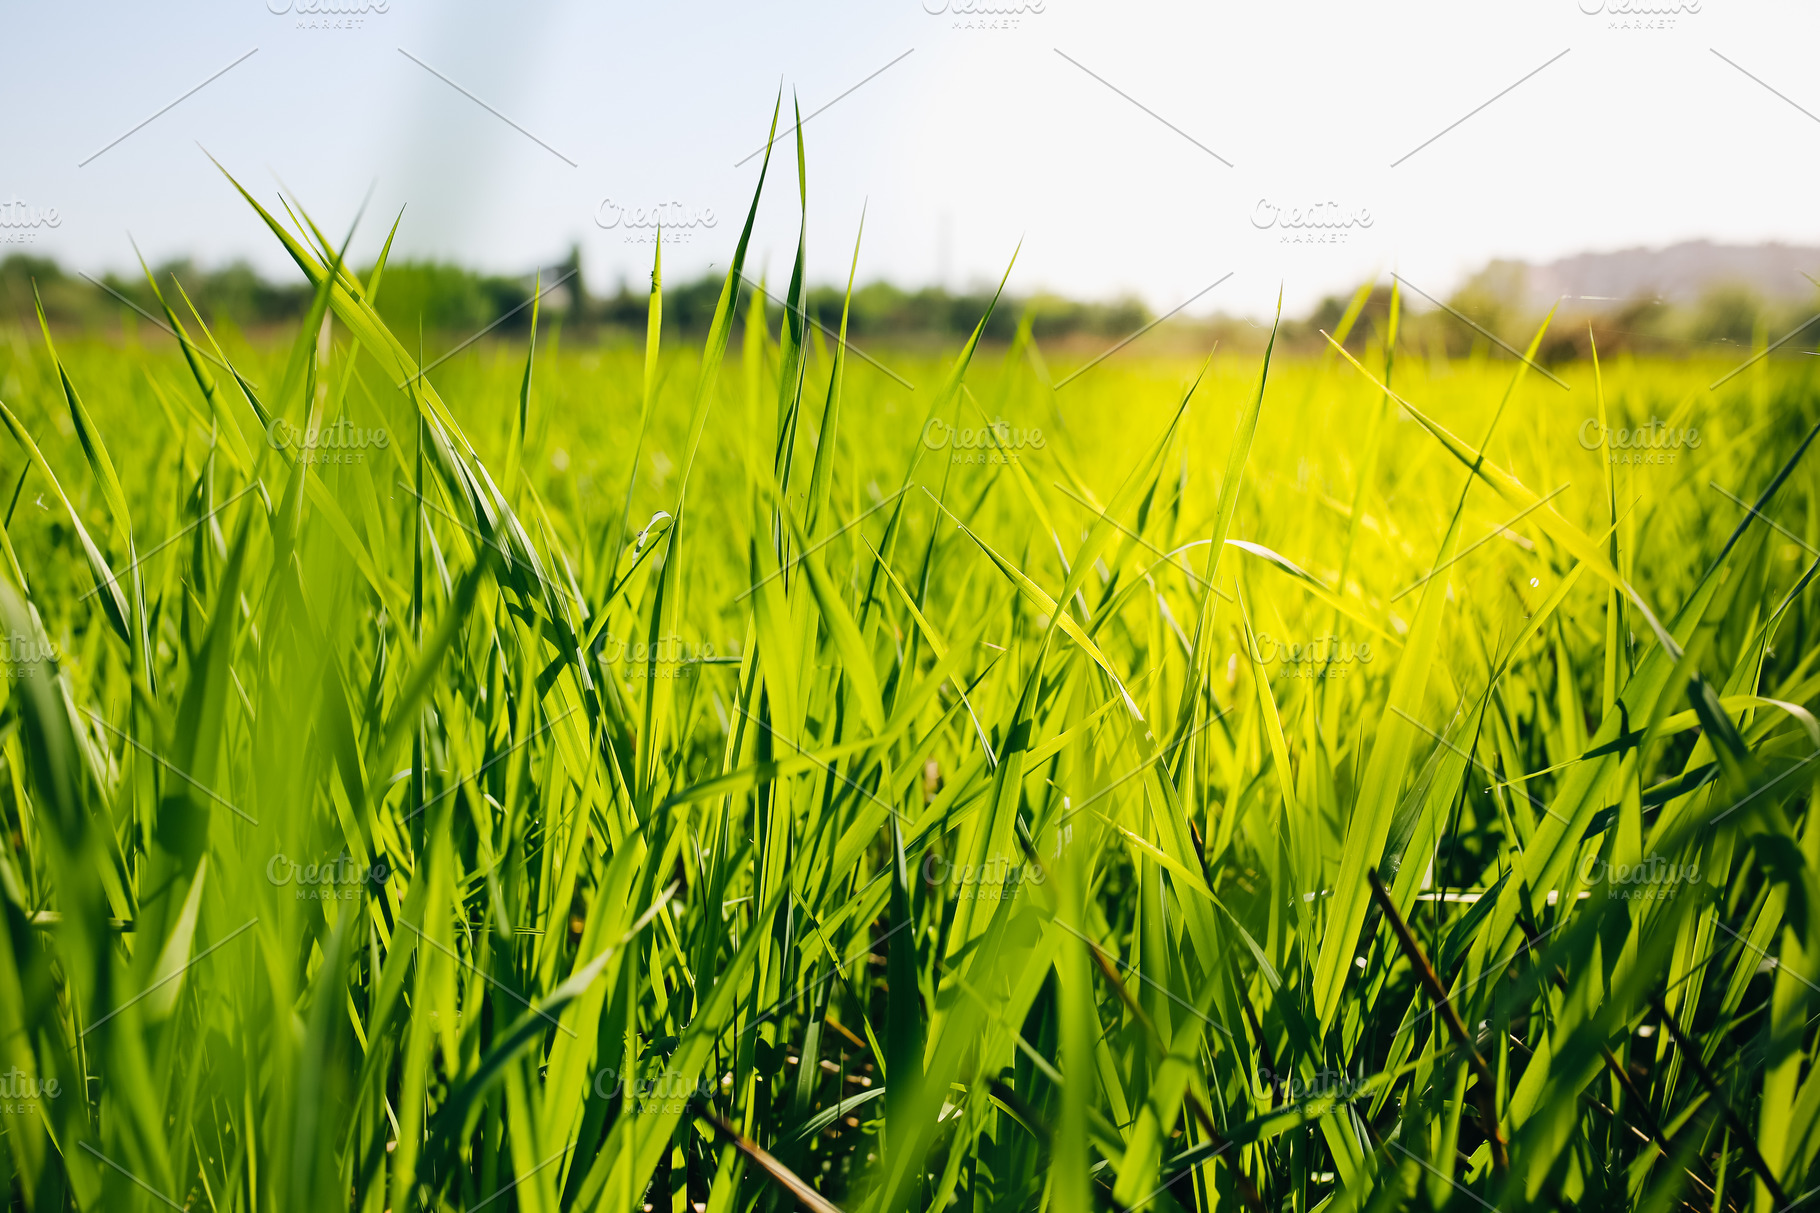 Tall green grass in summer field | High-Quality Nature Stock Photos